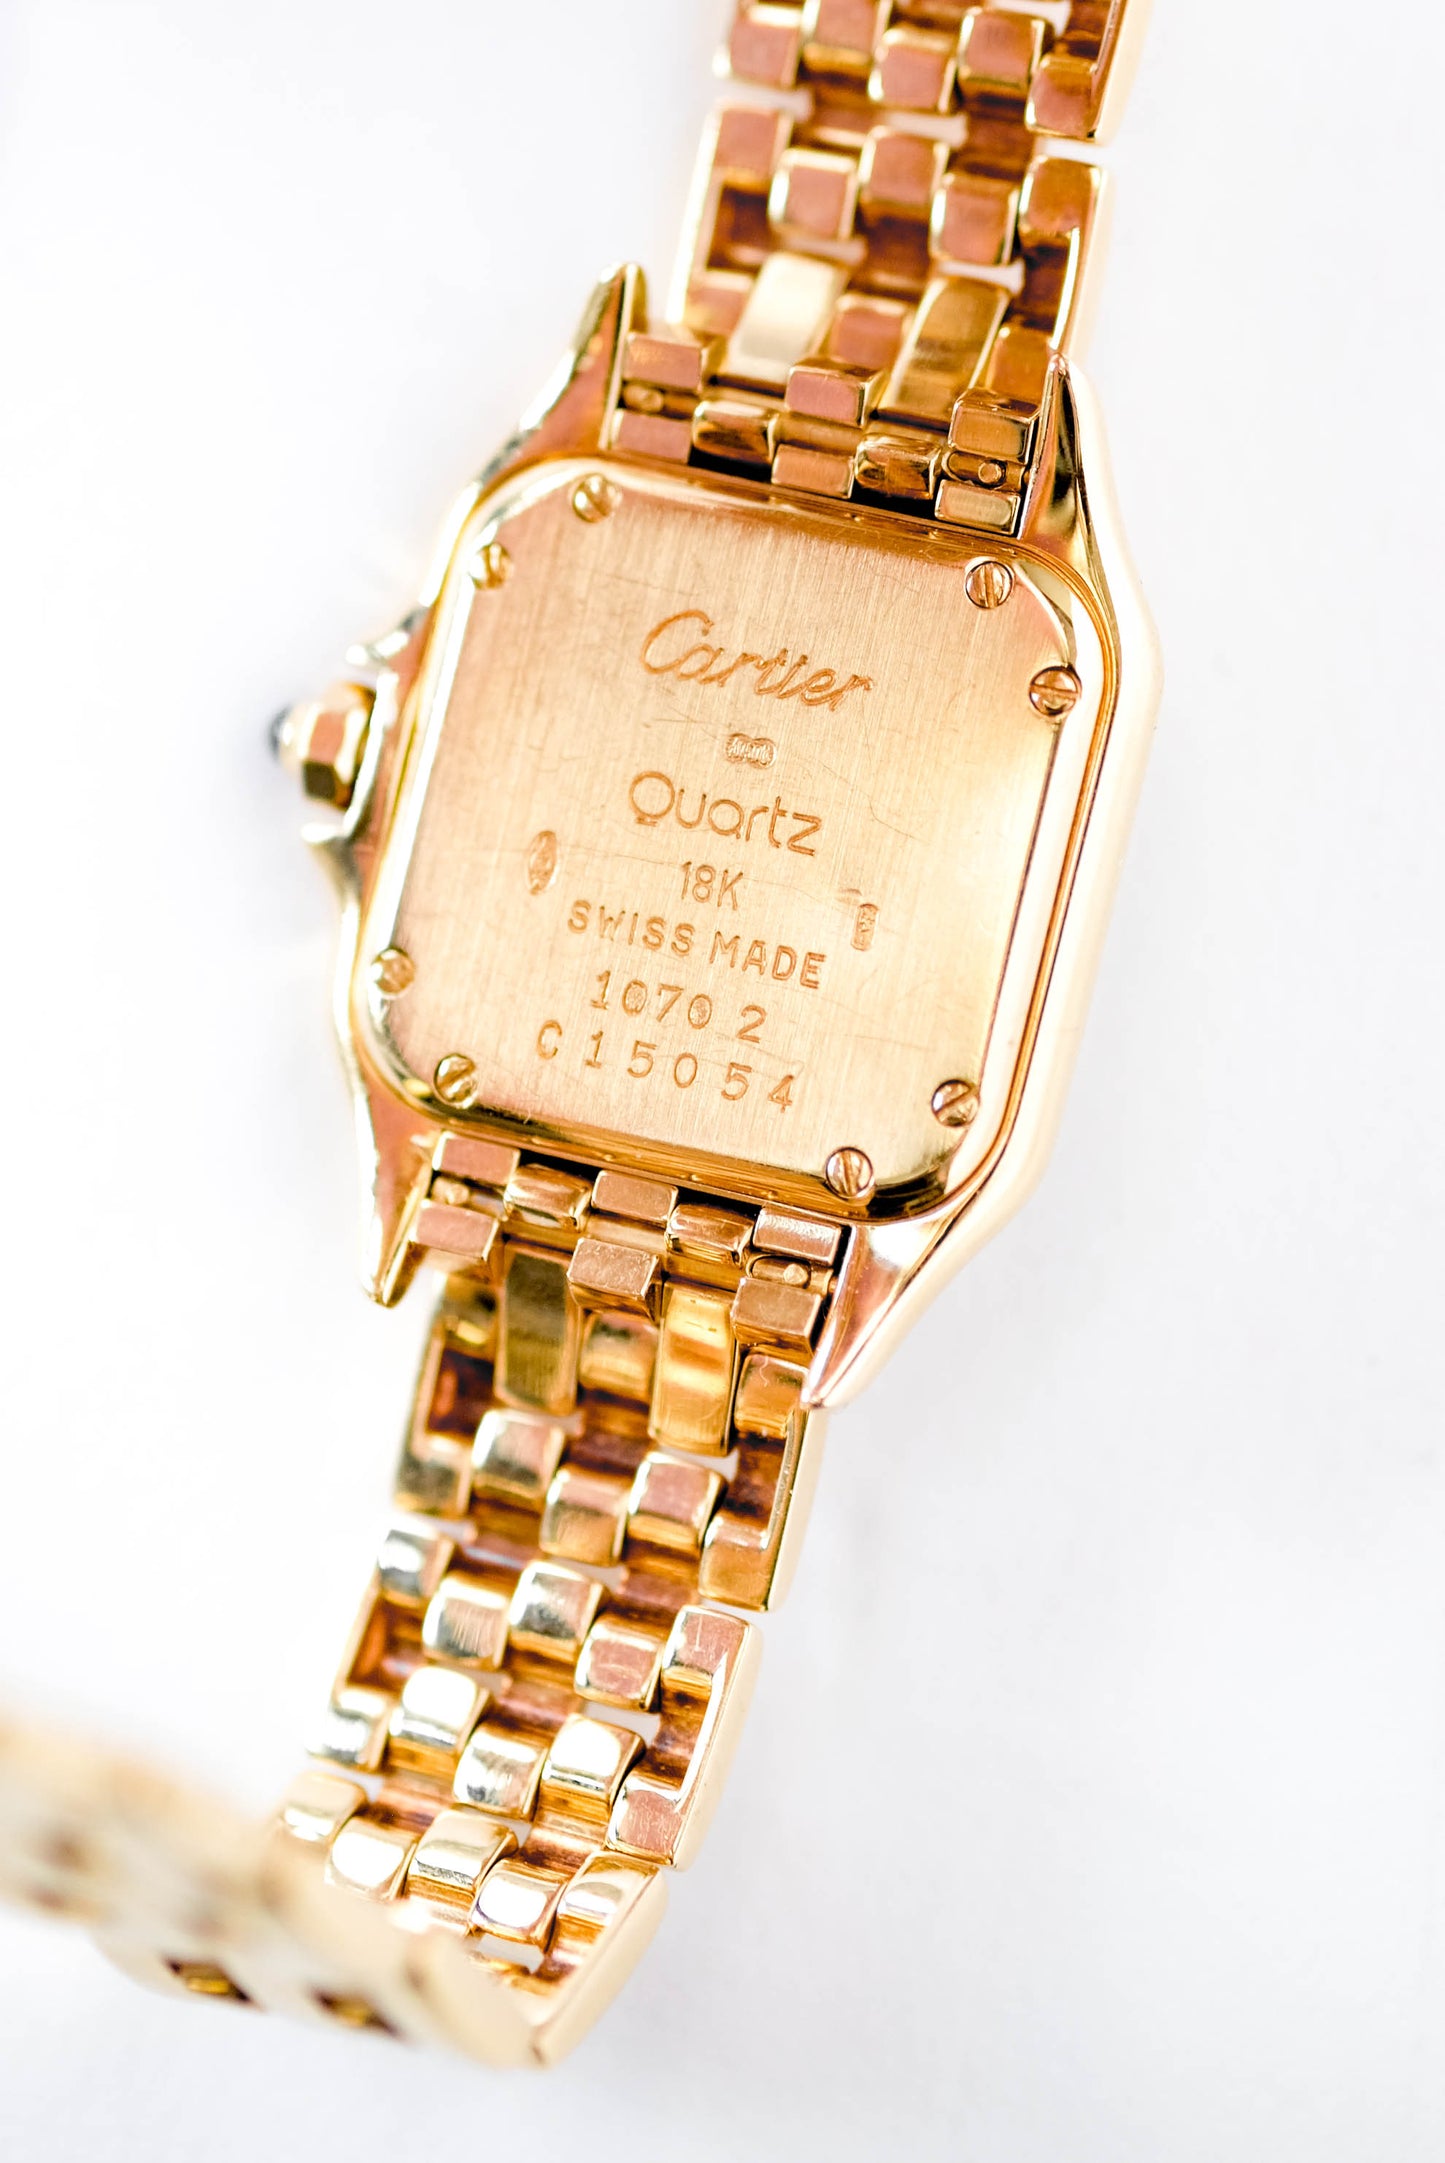 Cartier Panthère gold